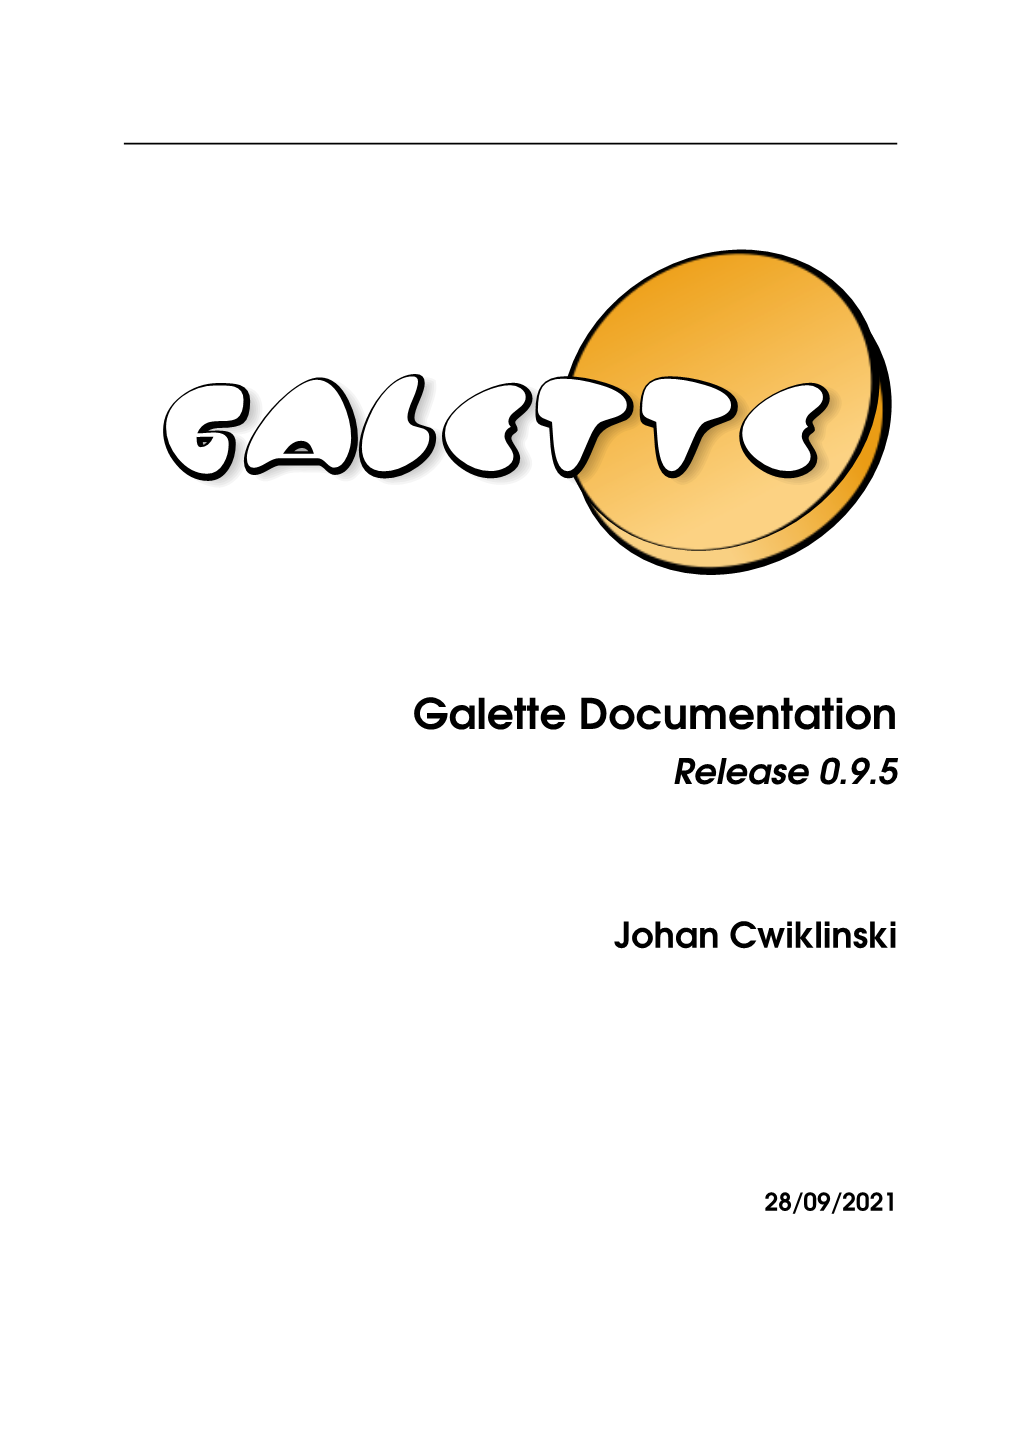 Galette Documentation Release 0.9.5